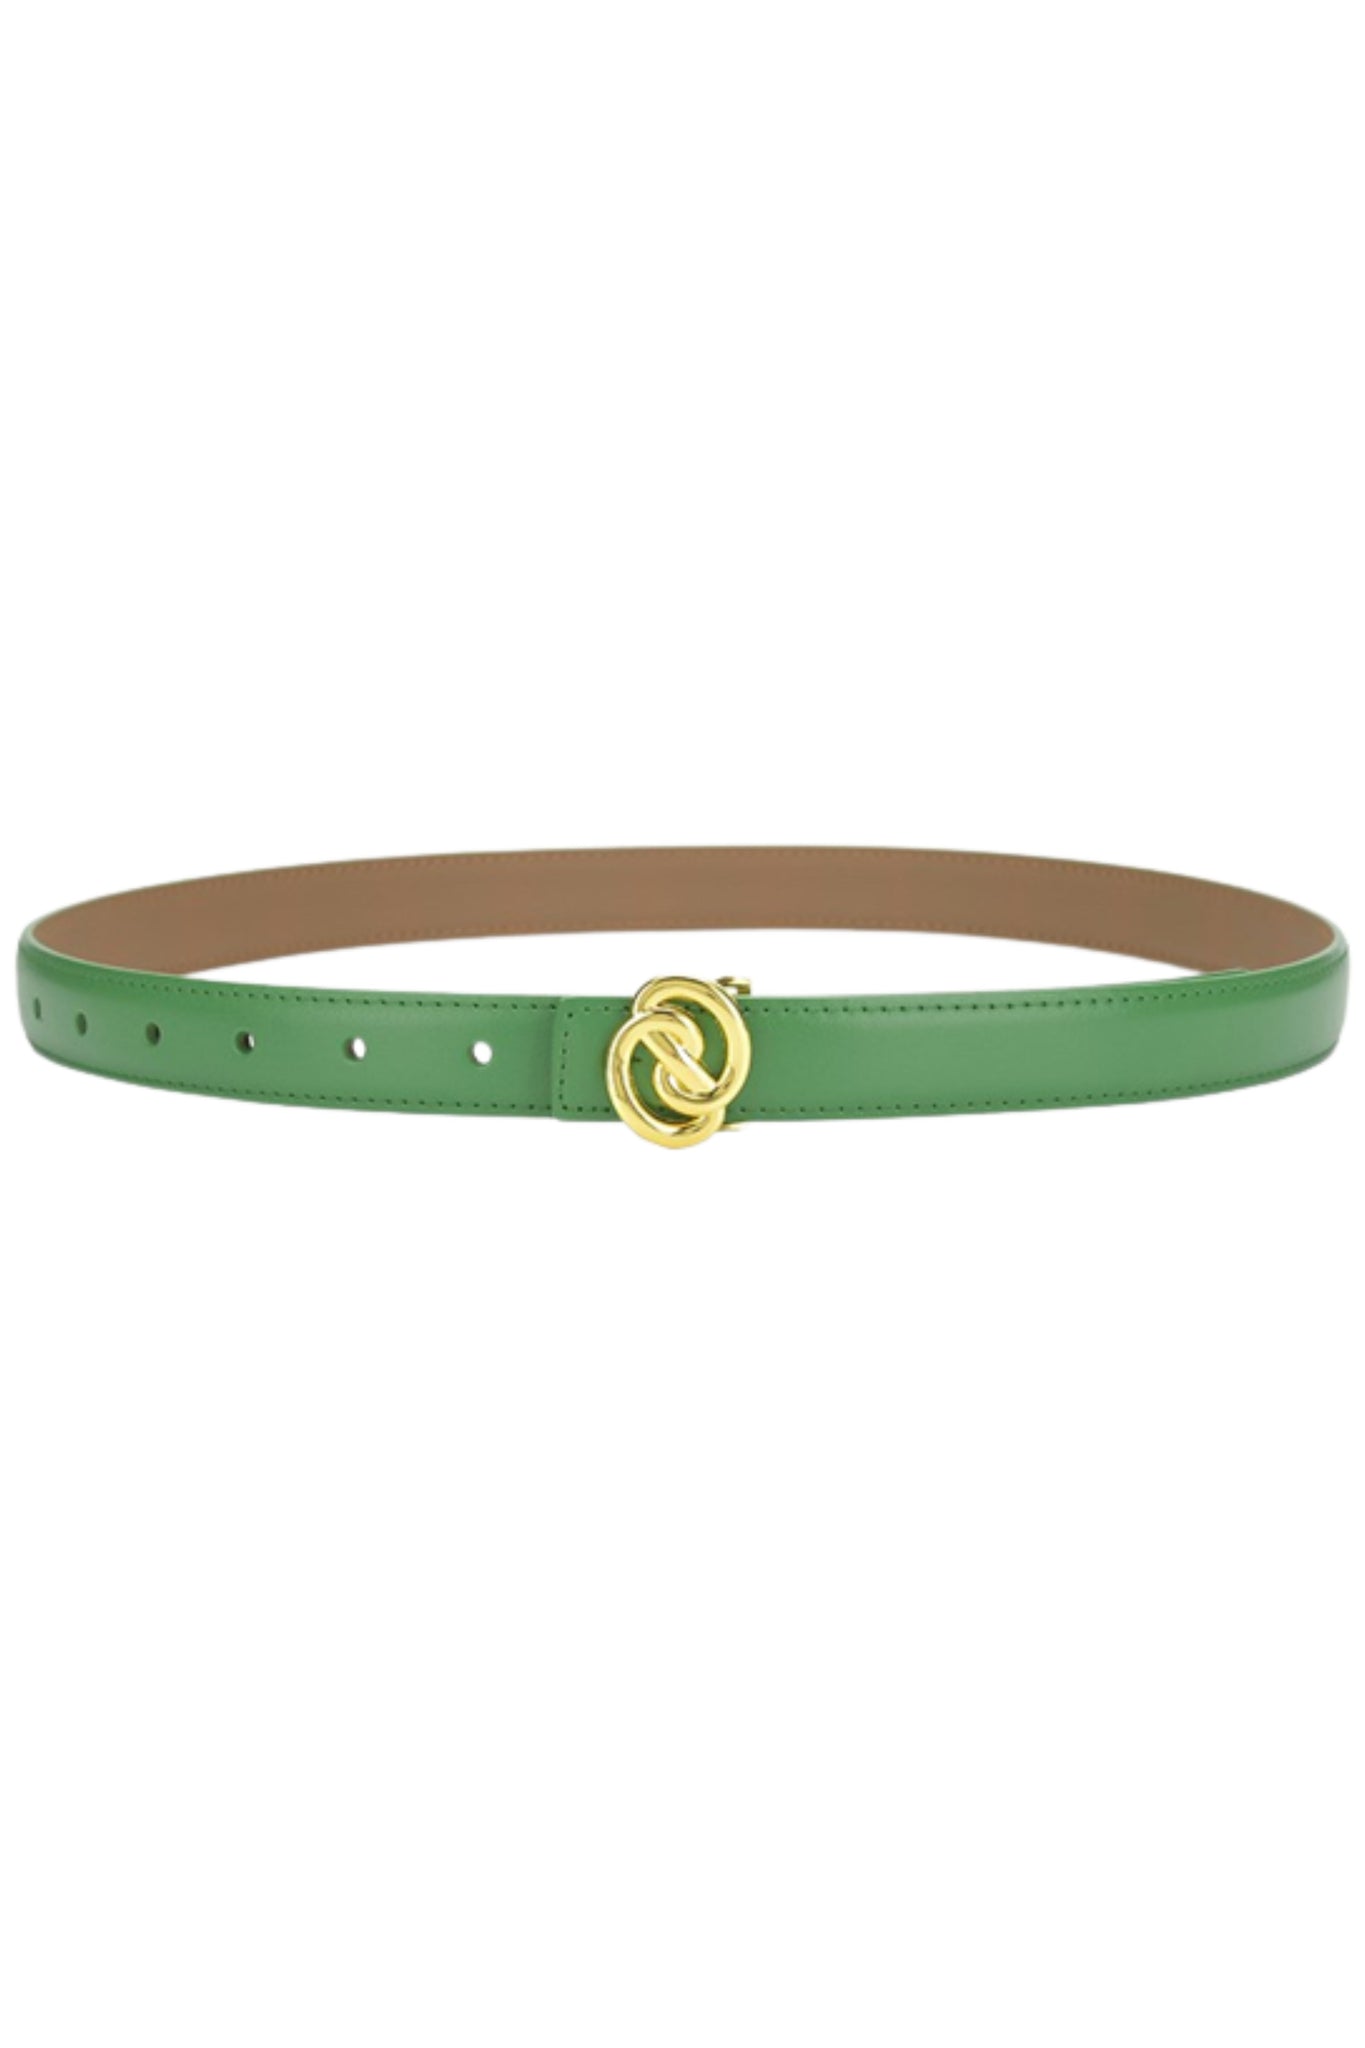 Grace Gold Buckle Leather Belt - Green